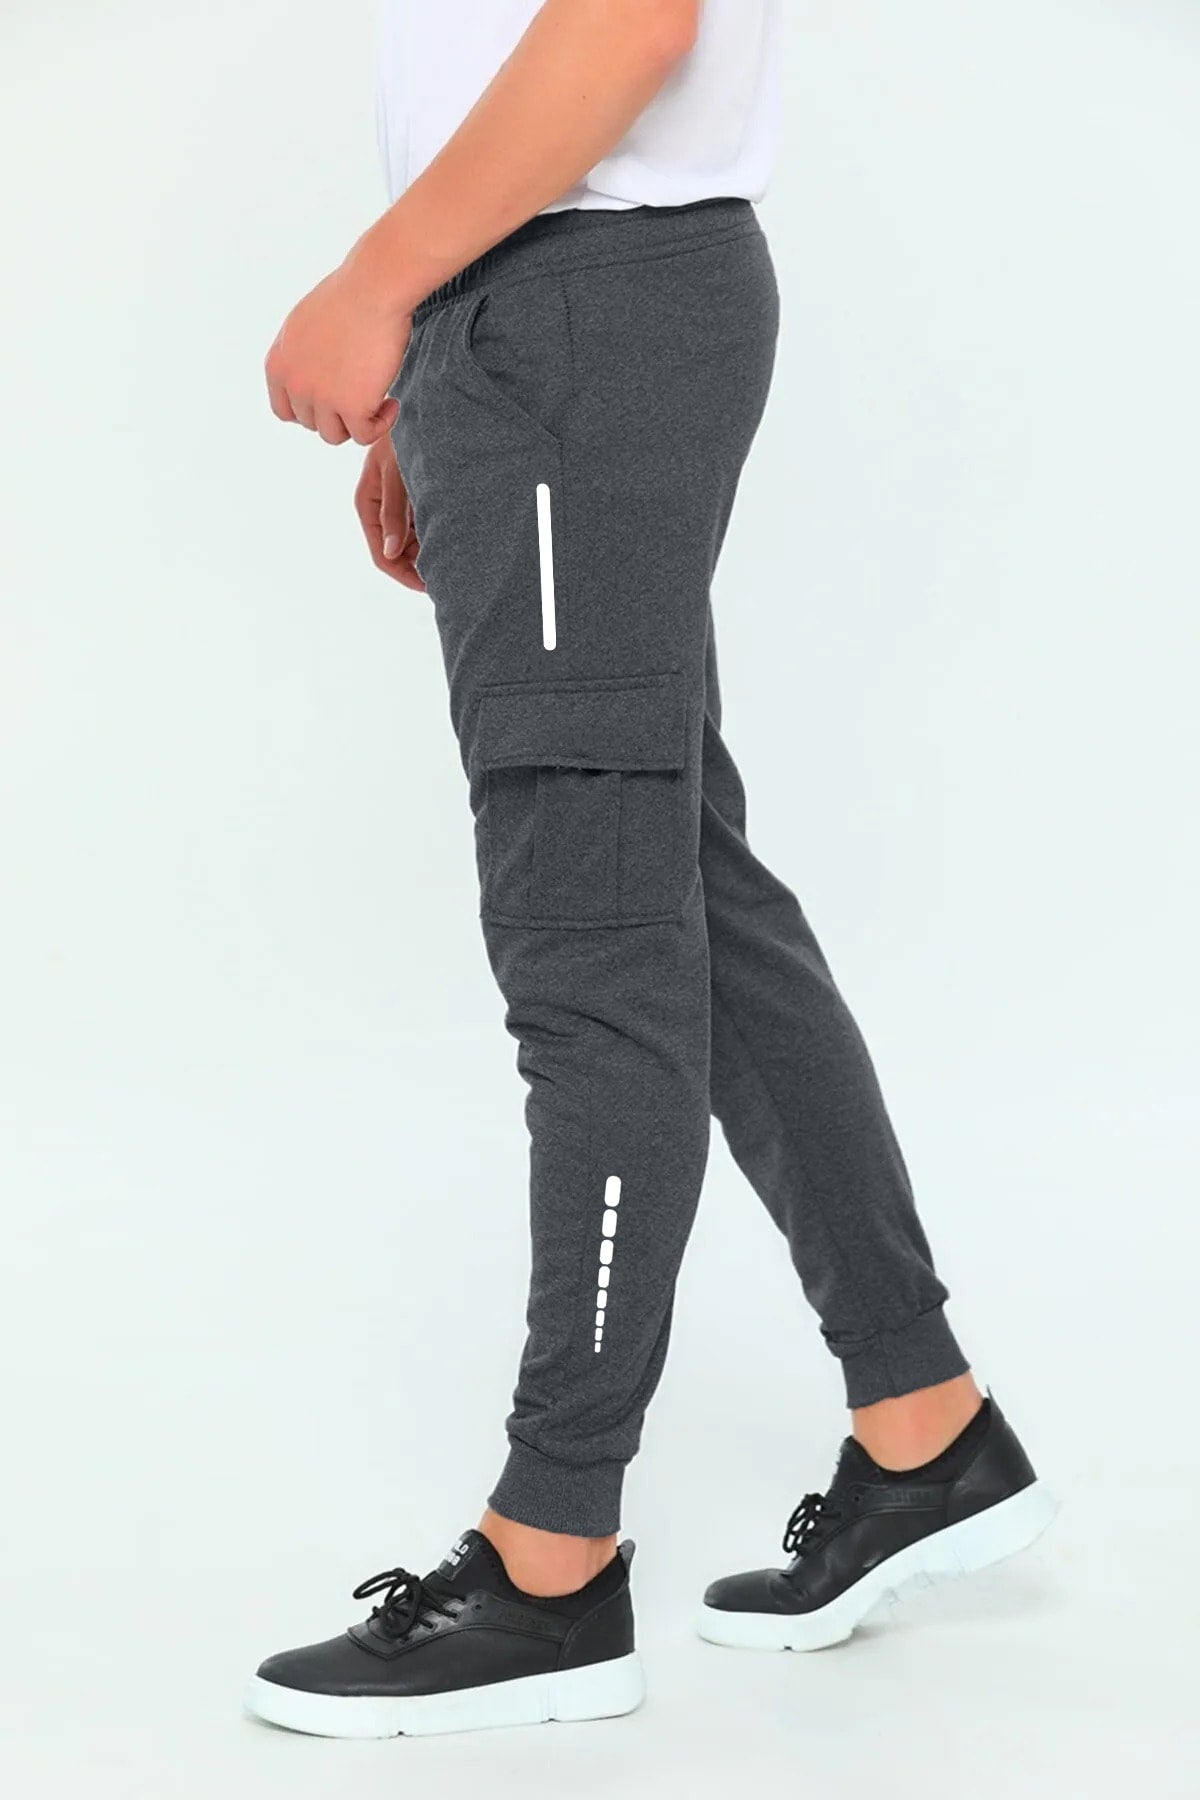 Unisex Commando Pocket Slimfit Reflector Printed Sweatpants